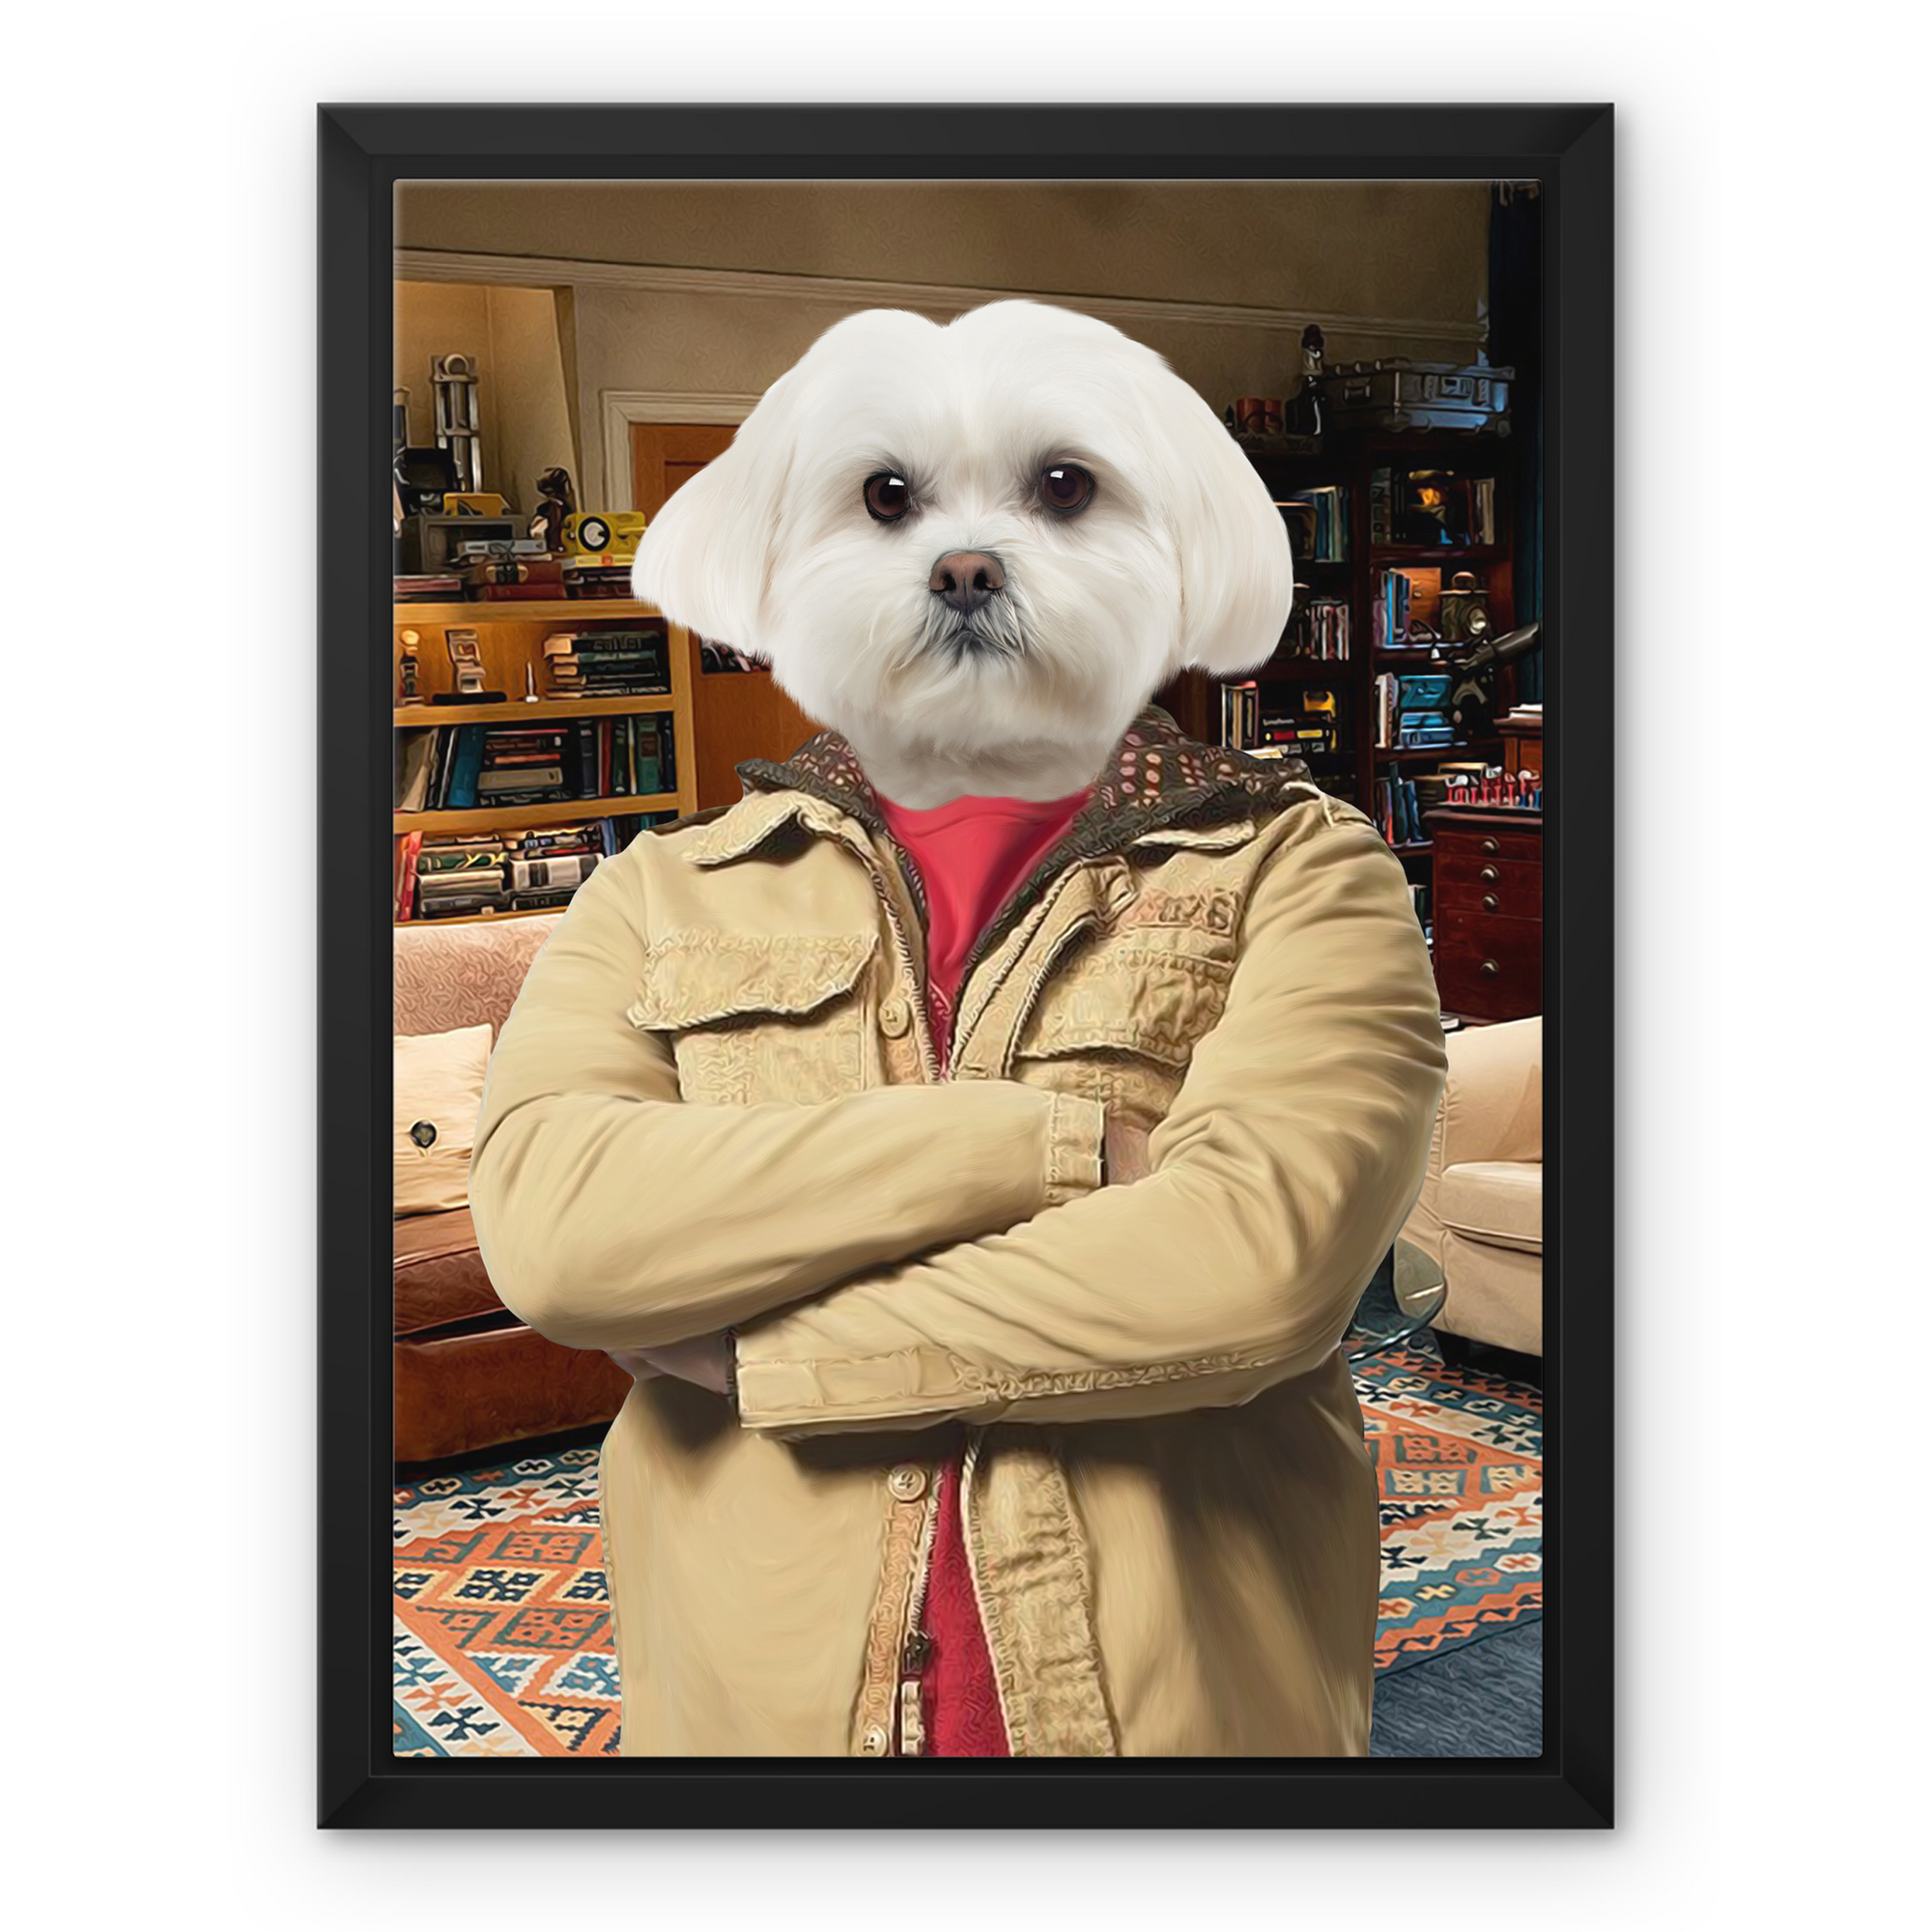 Paw & Glory, paw and glory, small dog portrait, aristocratic dog portraits, dog portrait background colors, best dog artists, admiral dog portrait, dog portraits admiral, pet portrait